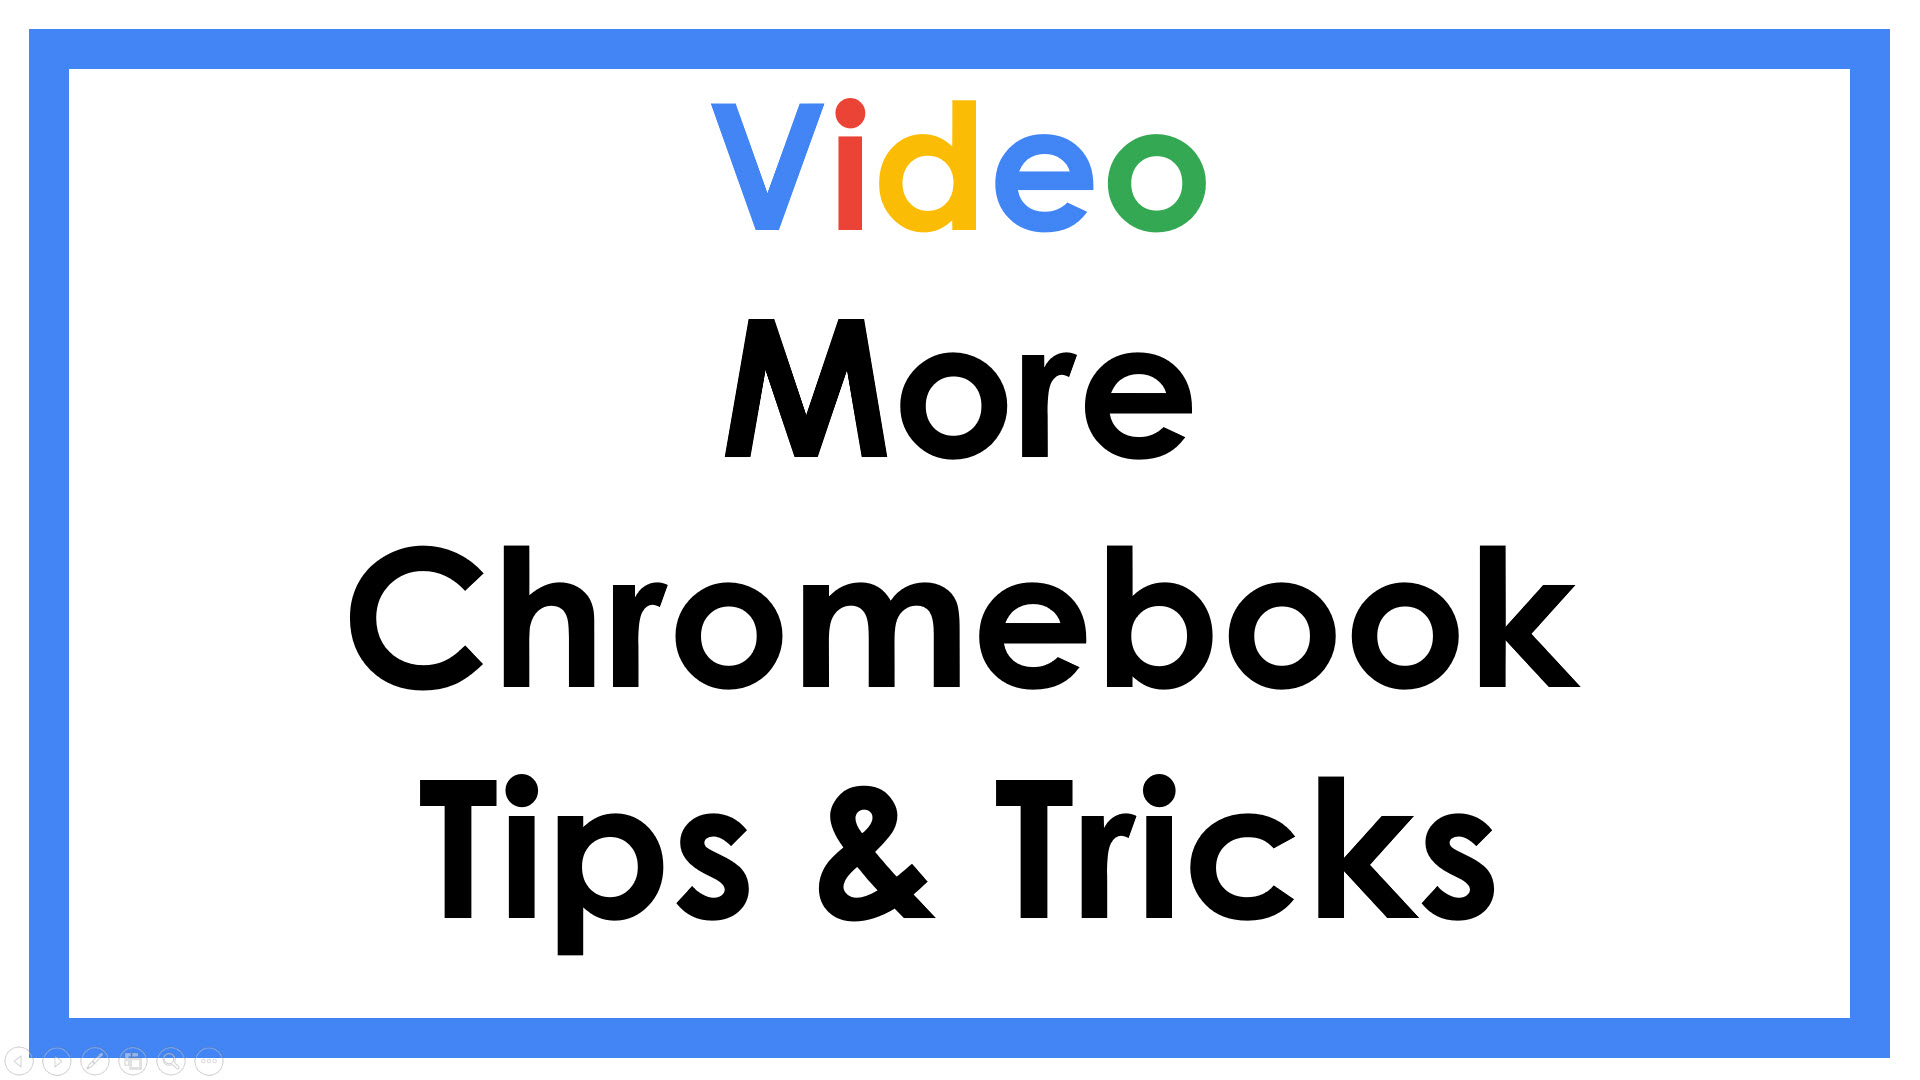 Video More Chromebook Tips & Tricks